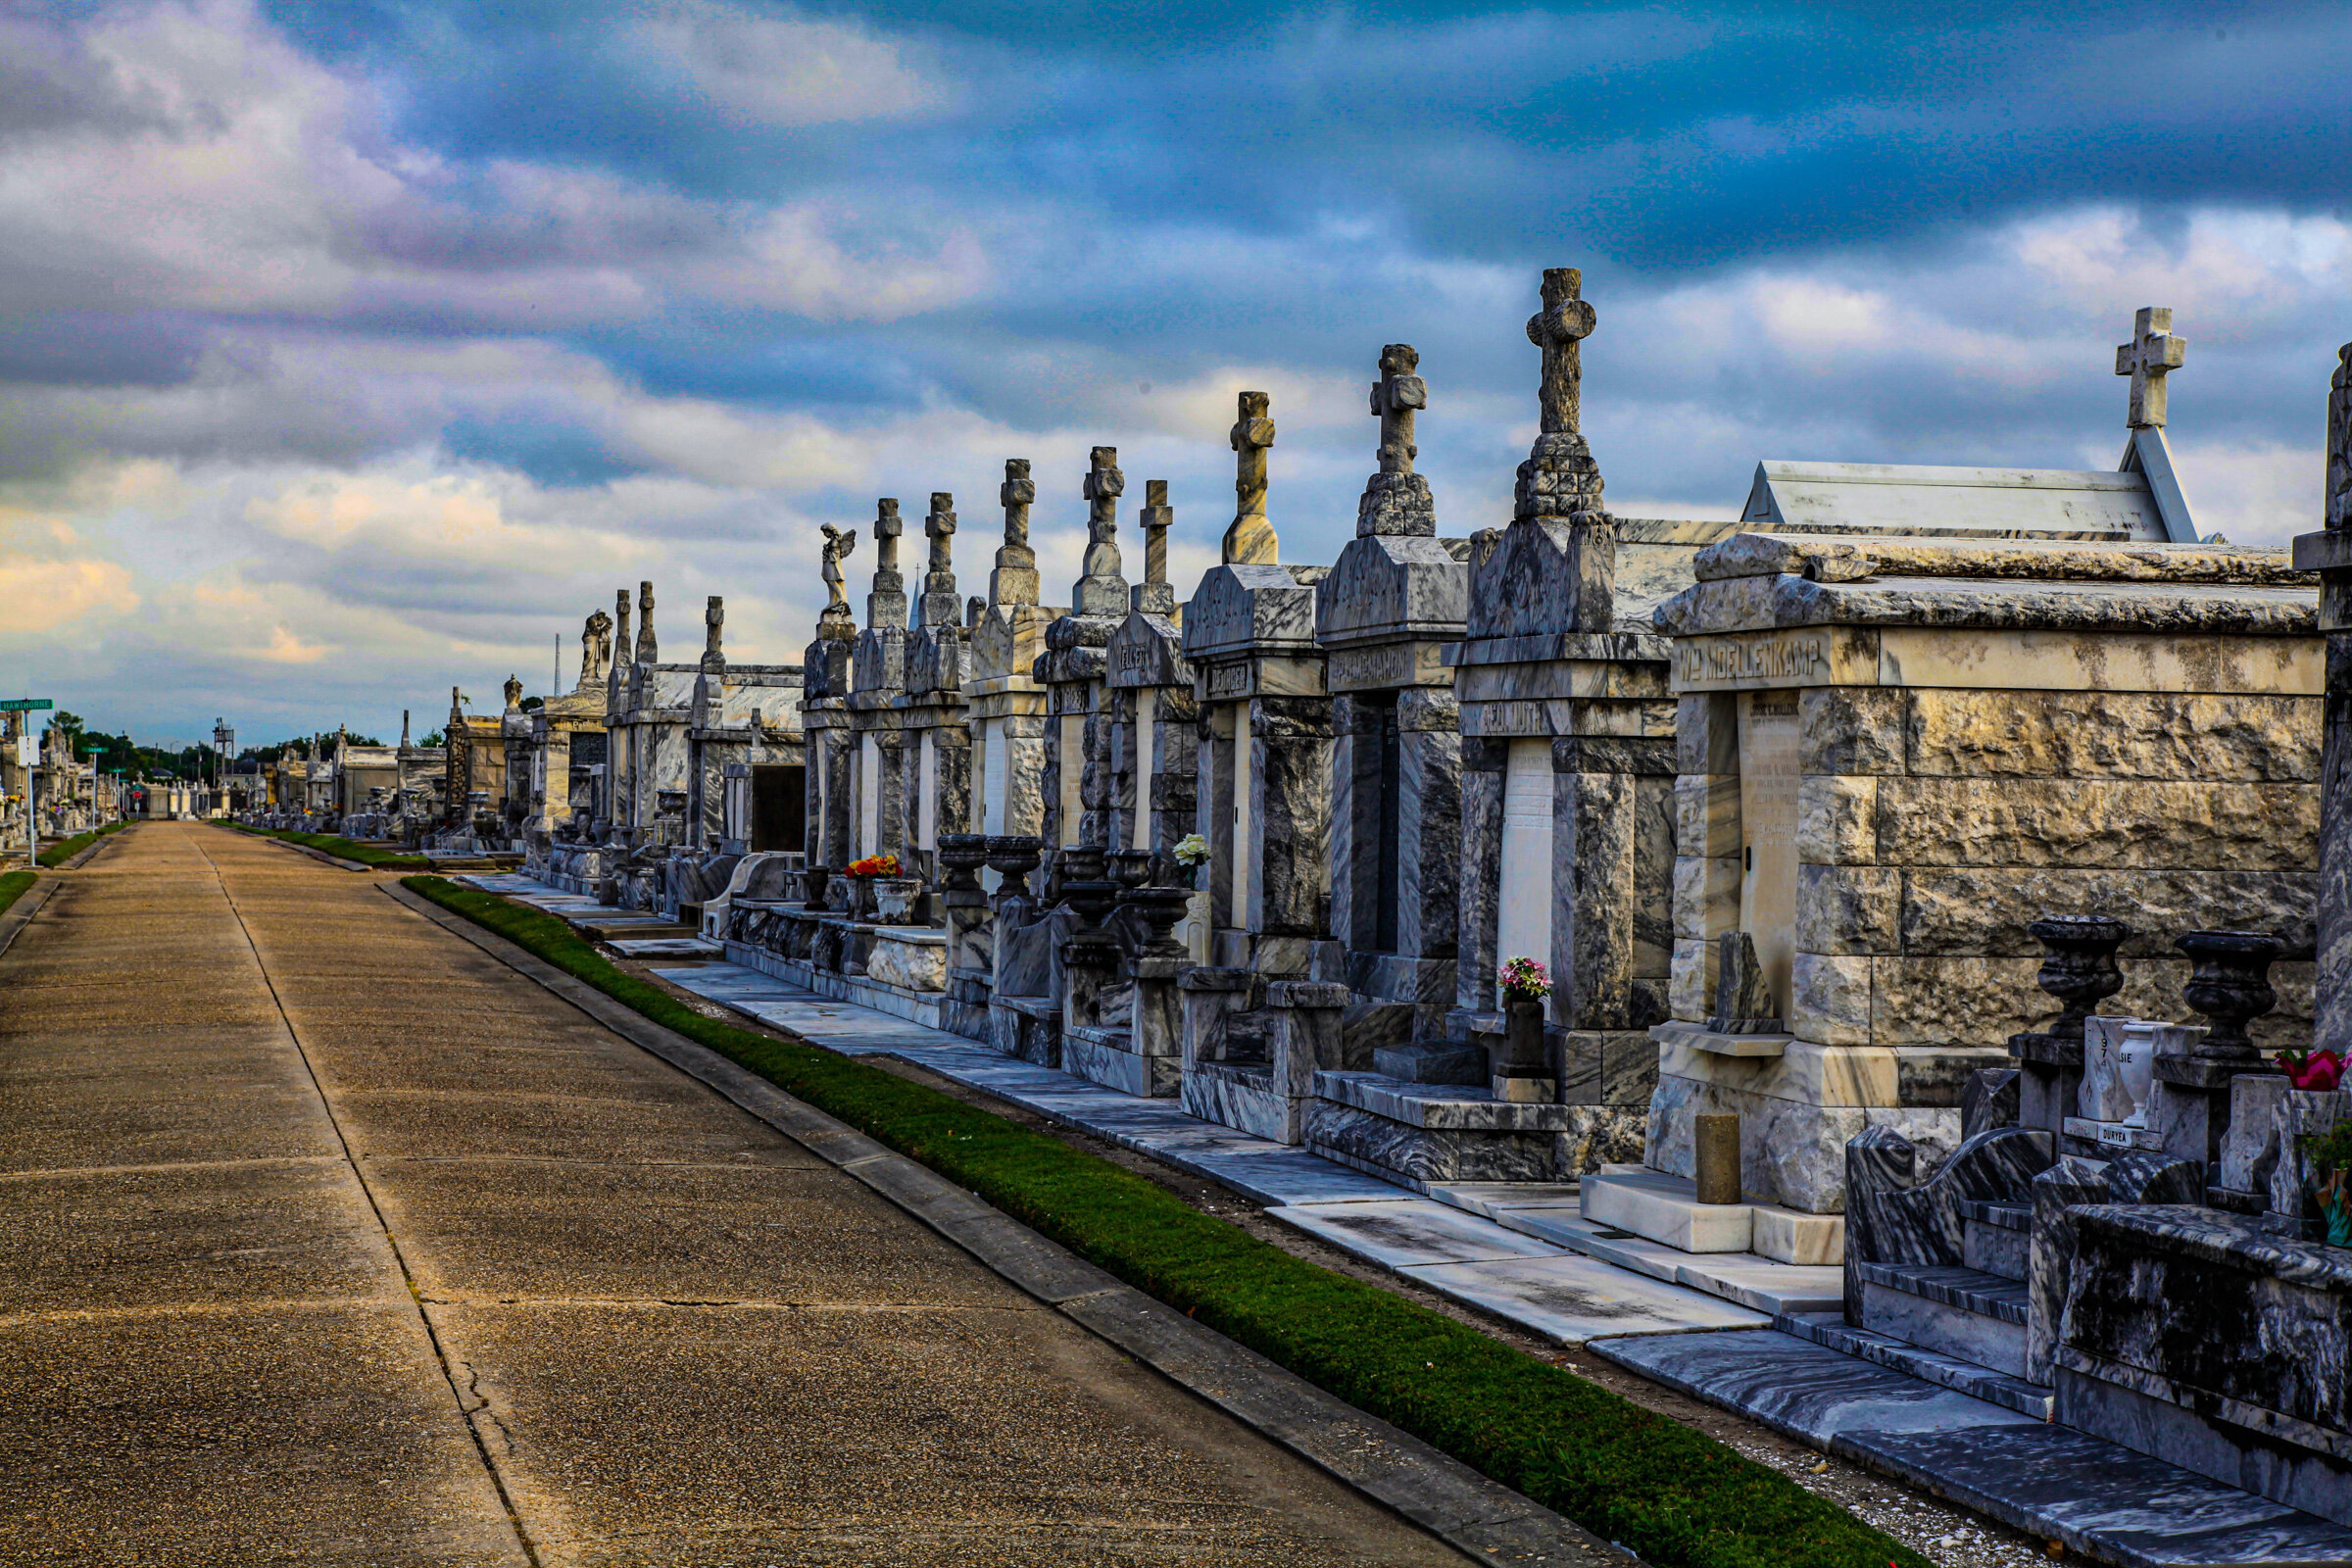  Greenwood Cemetery, Metairie, LA USA 